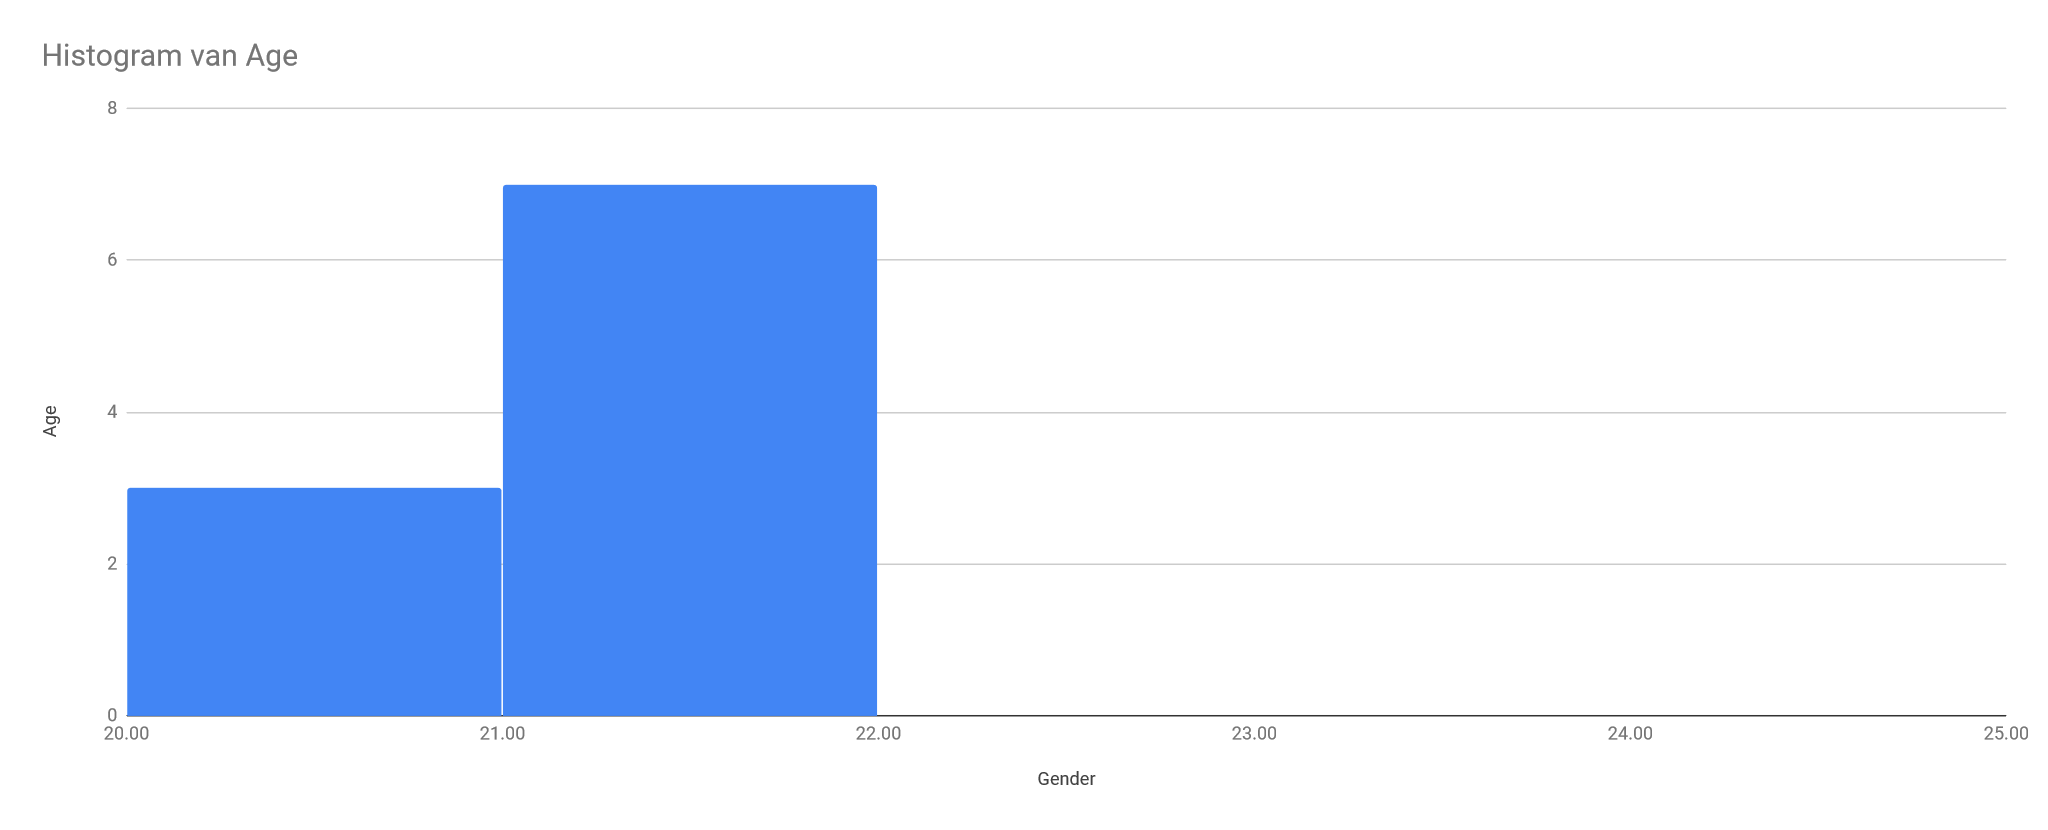 Age distribution among research participants.